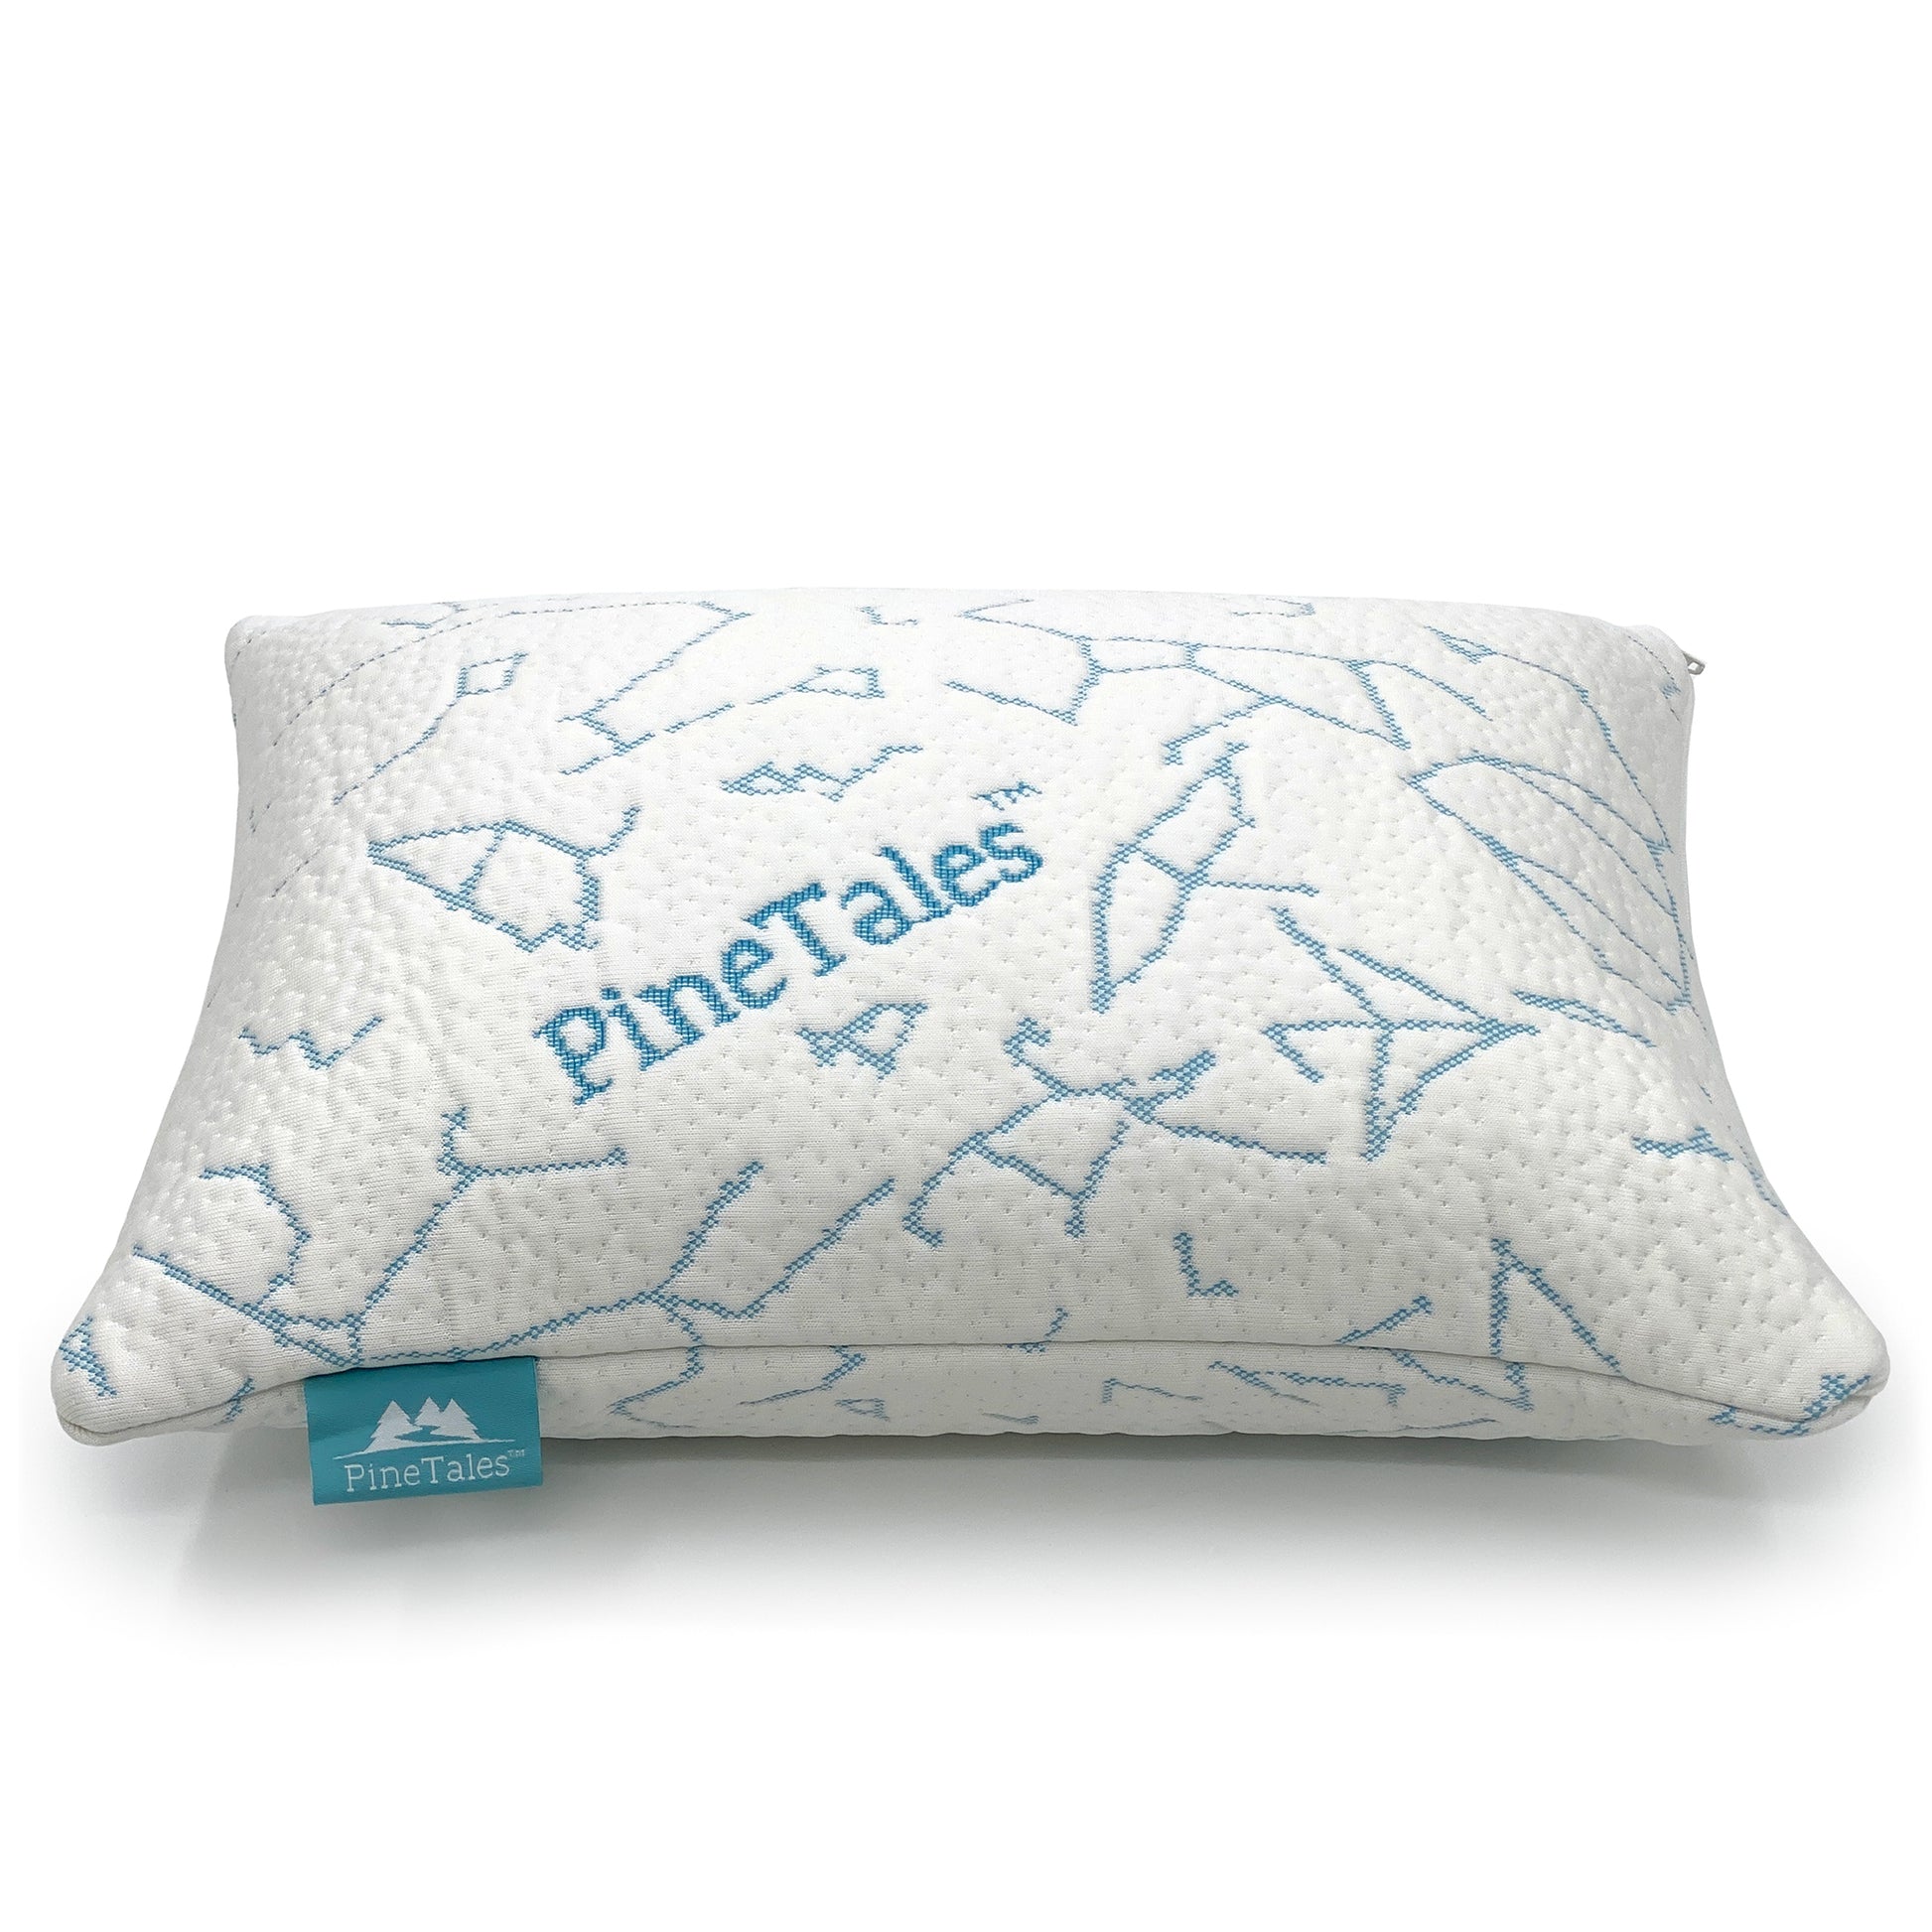 Buckwheat Travel Pillow - PineTales - Cooling